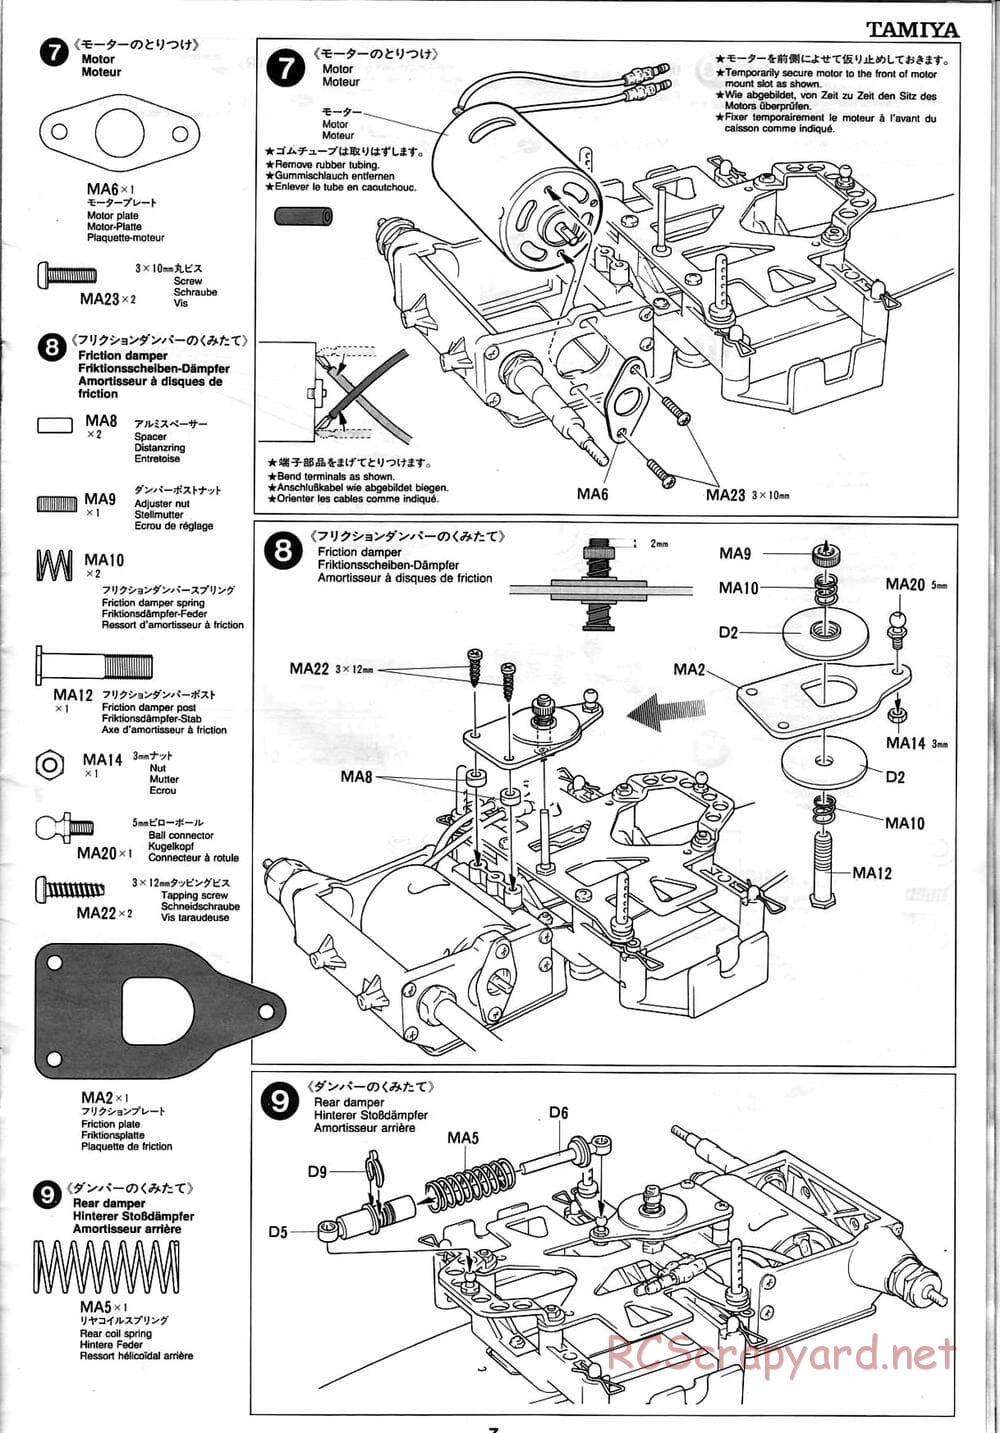 Tamiya - Ferrari F310B - F103RS Chassis - Manual - Page 7